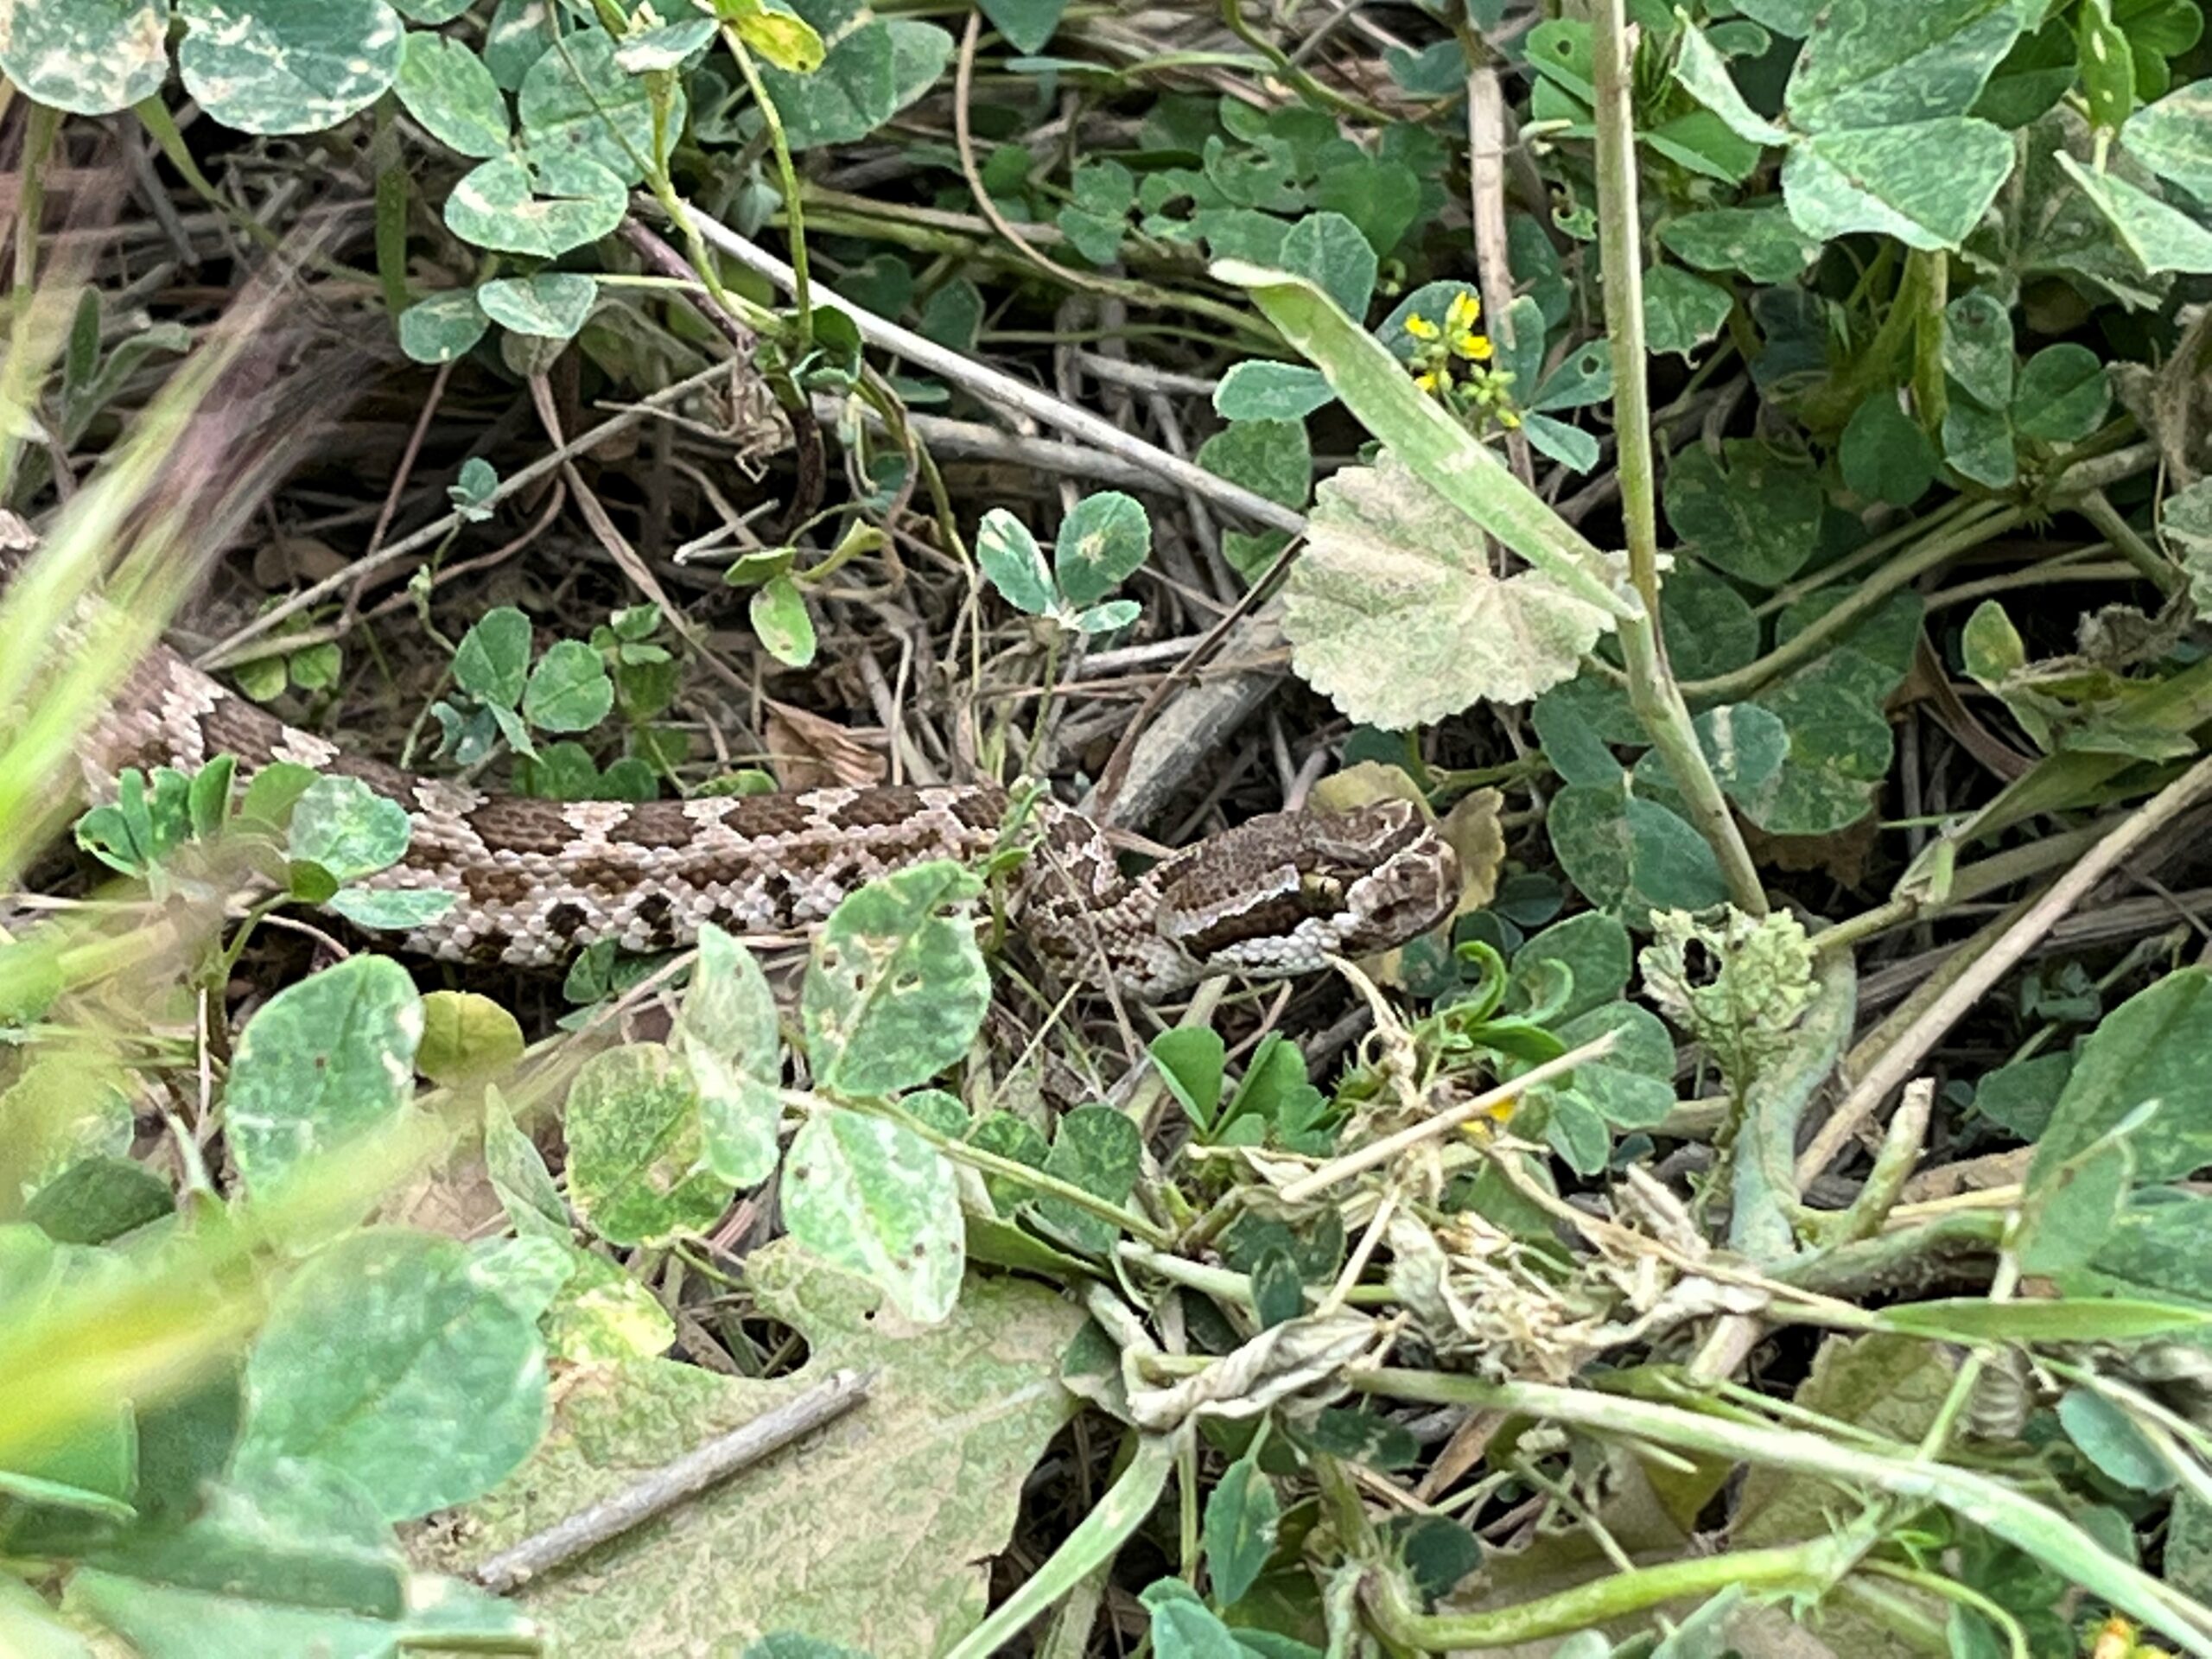 Rattlesnake in undergrowth